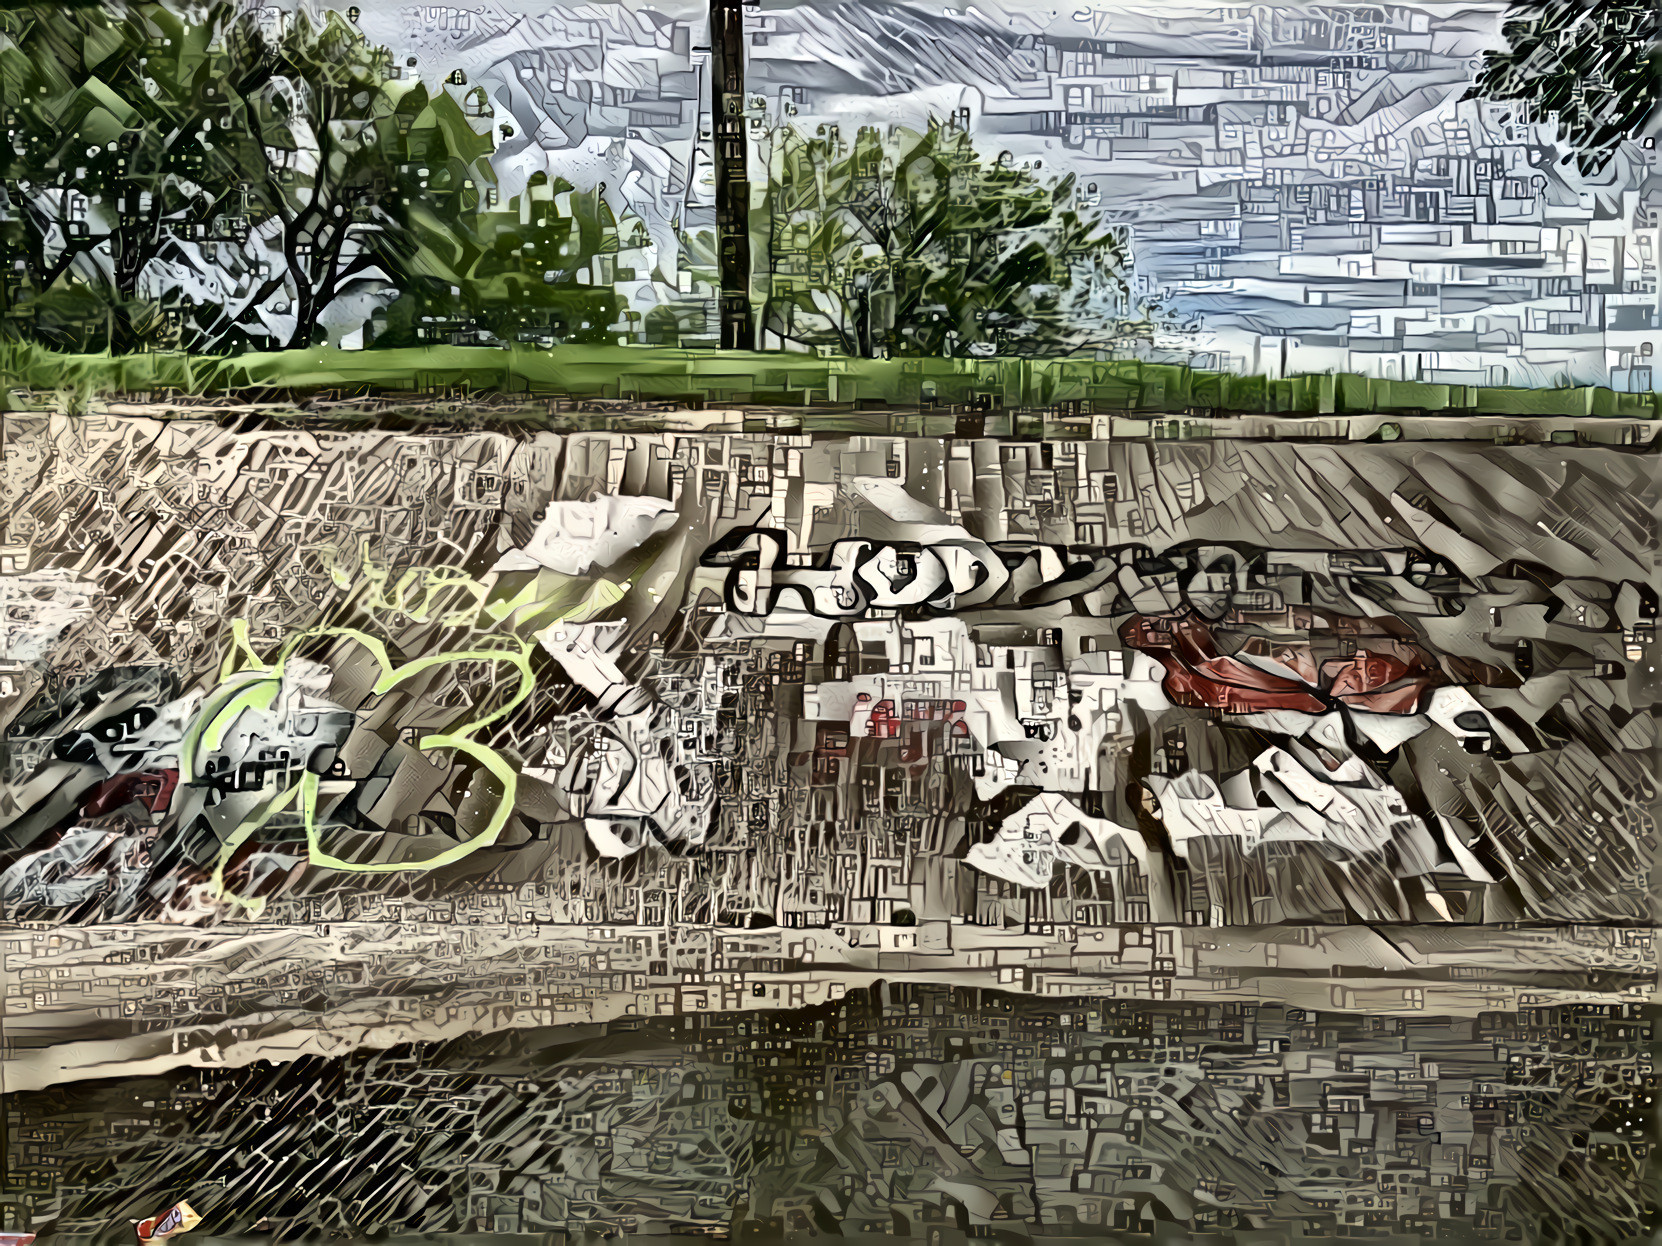 Granulated gloom of graffiti